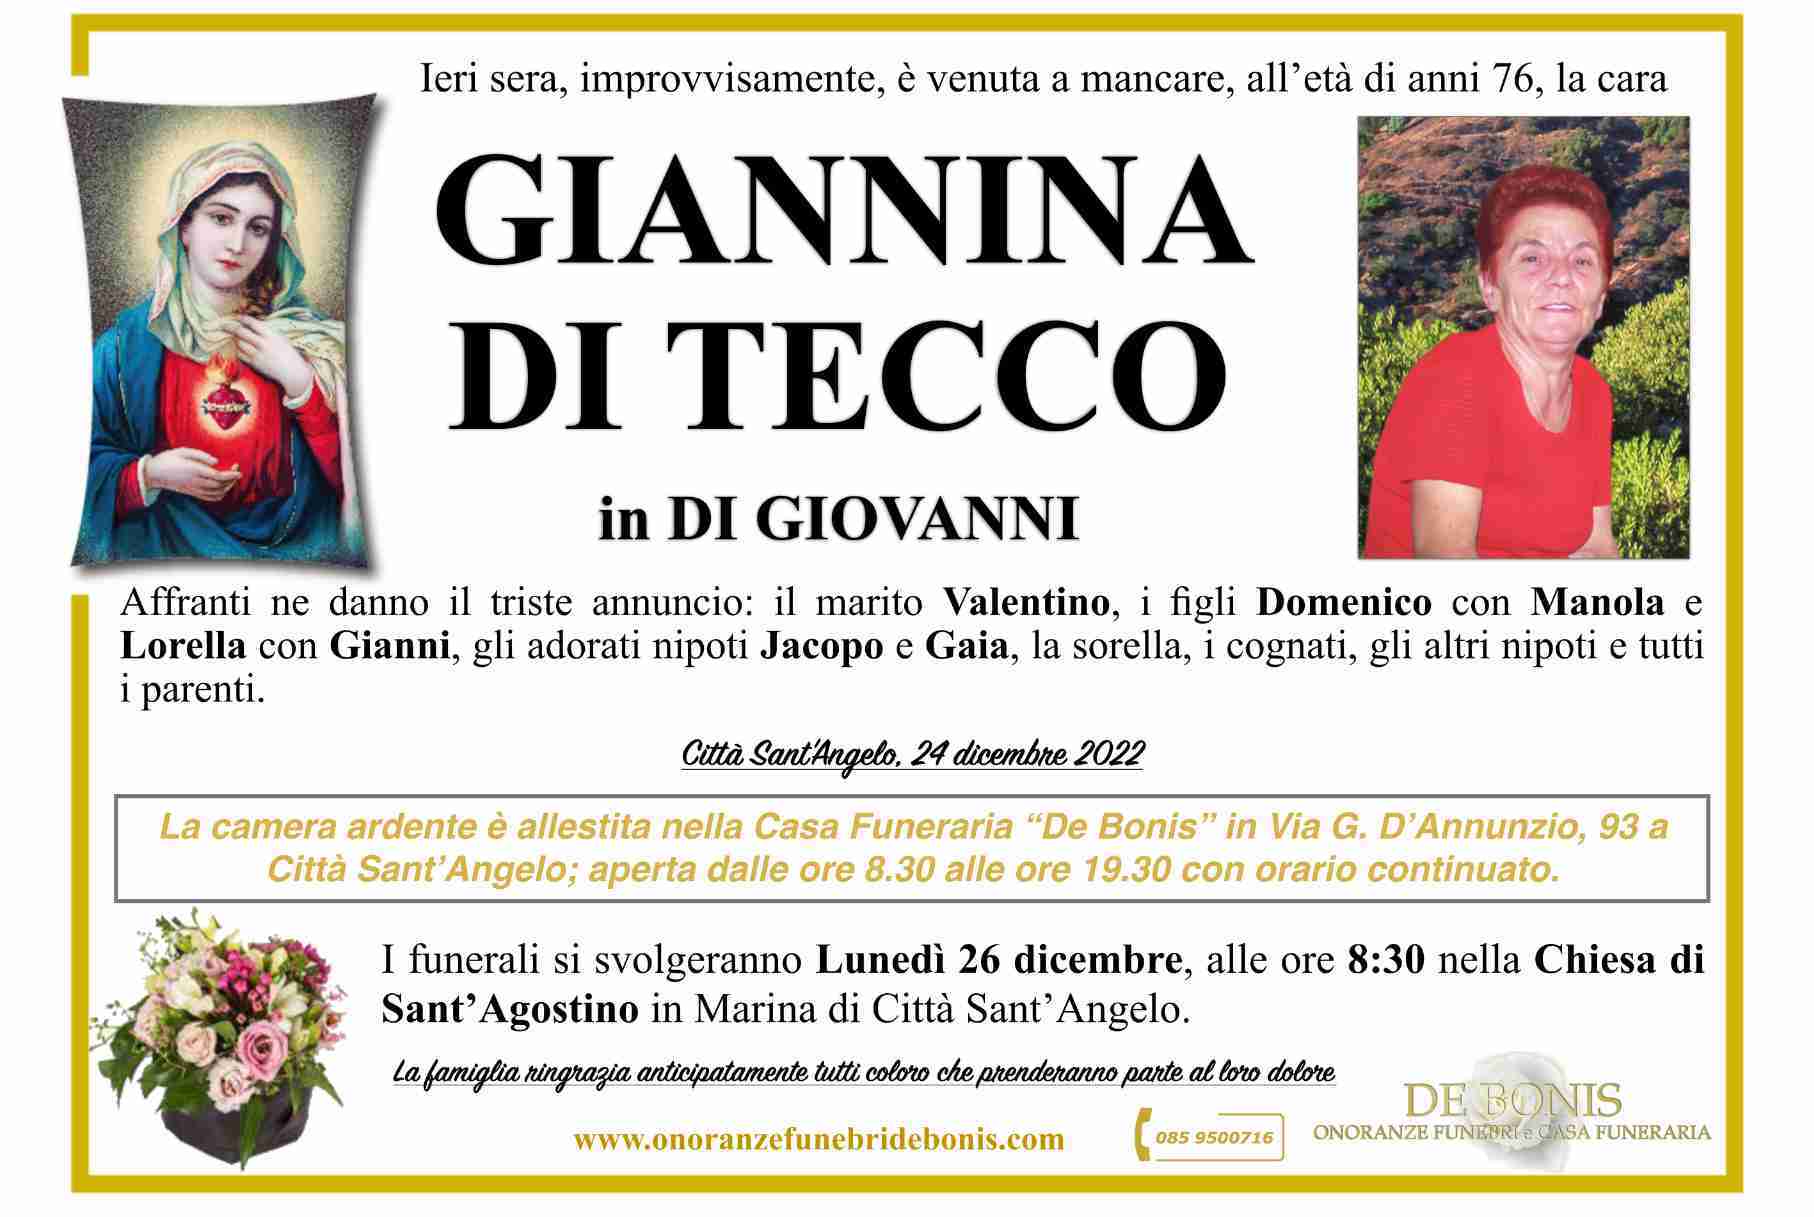 Giannina Di Tecco